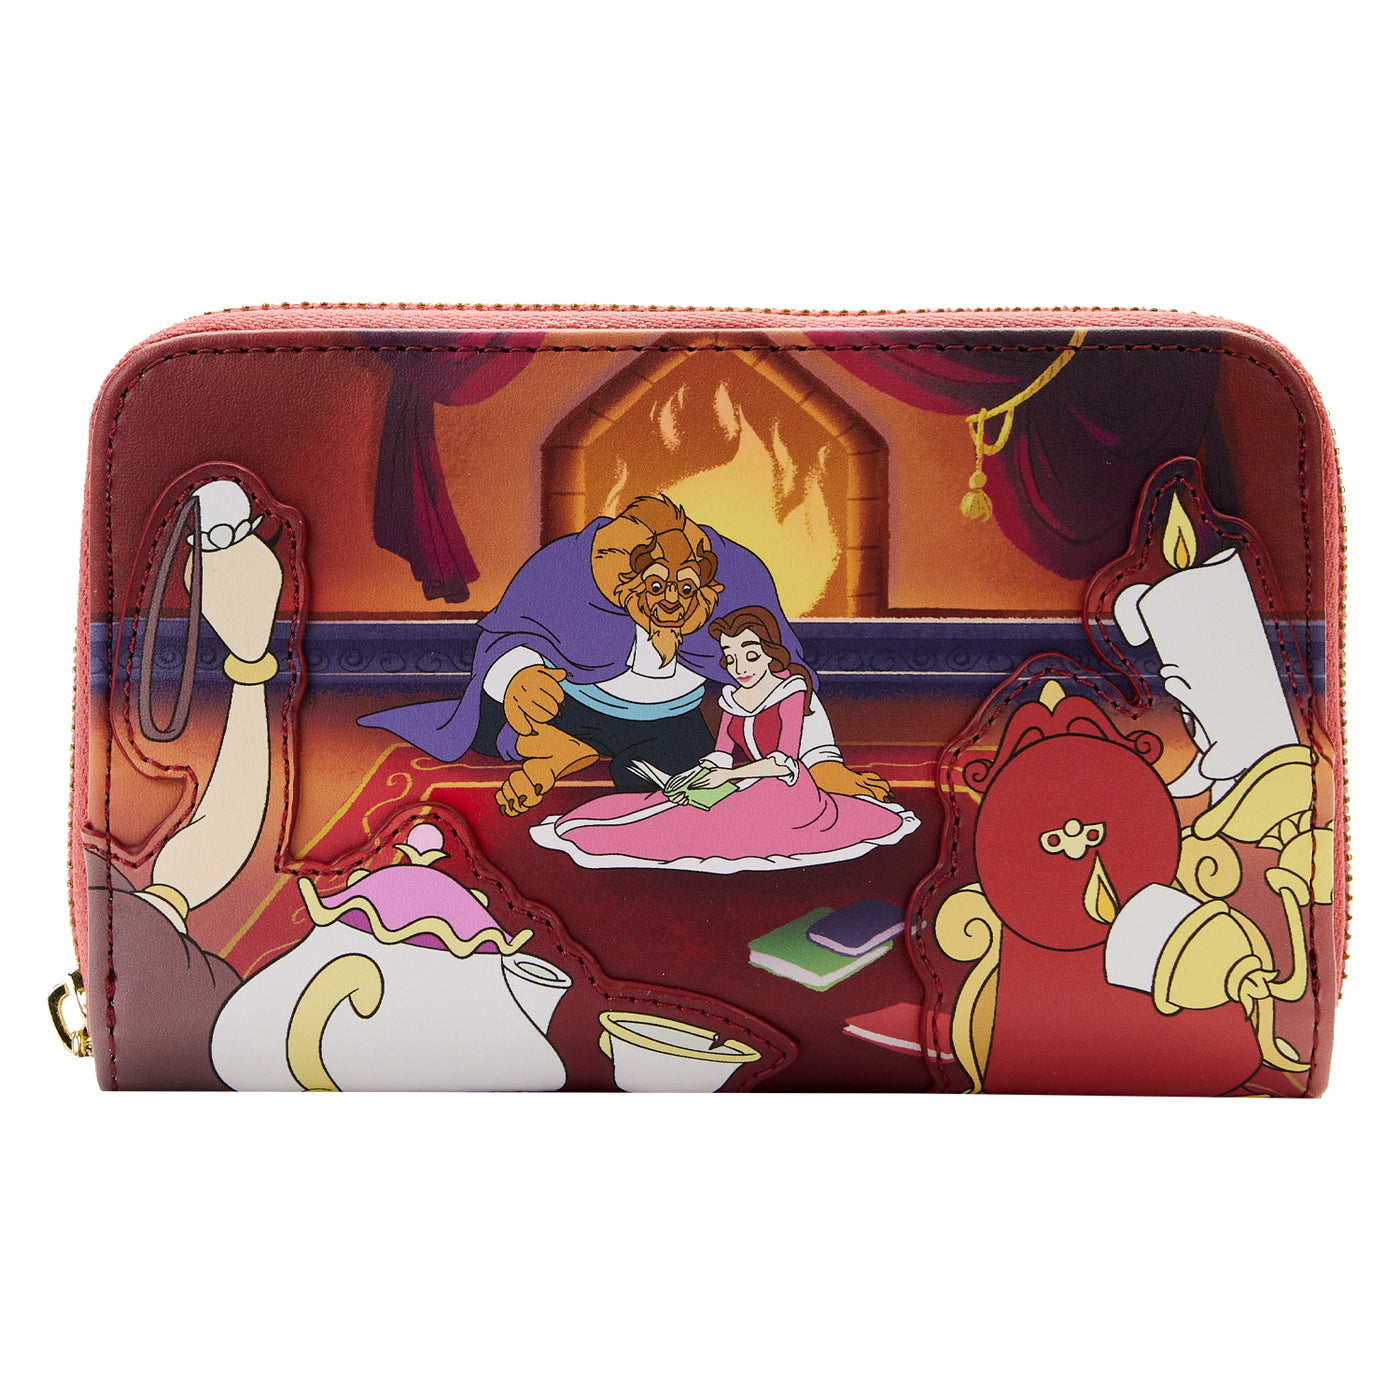 Disney Beauty and the Beast Fireplace Scene Wallet